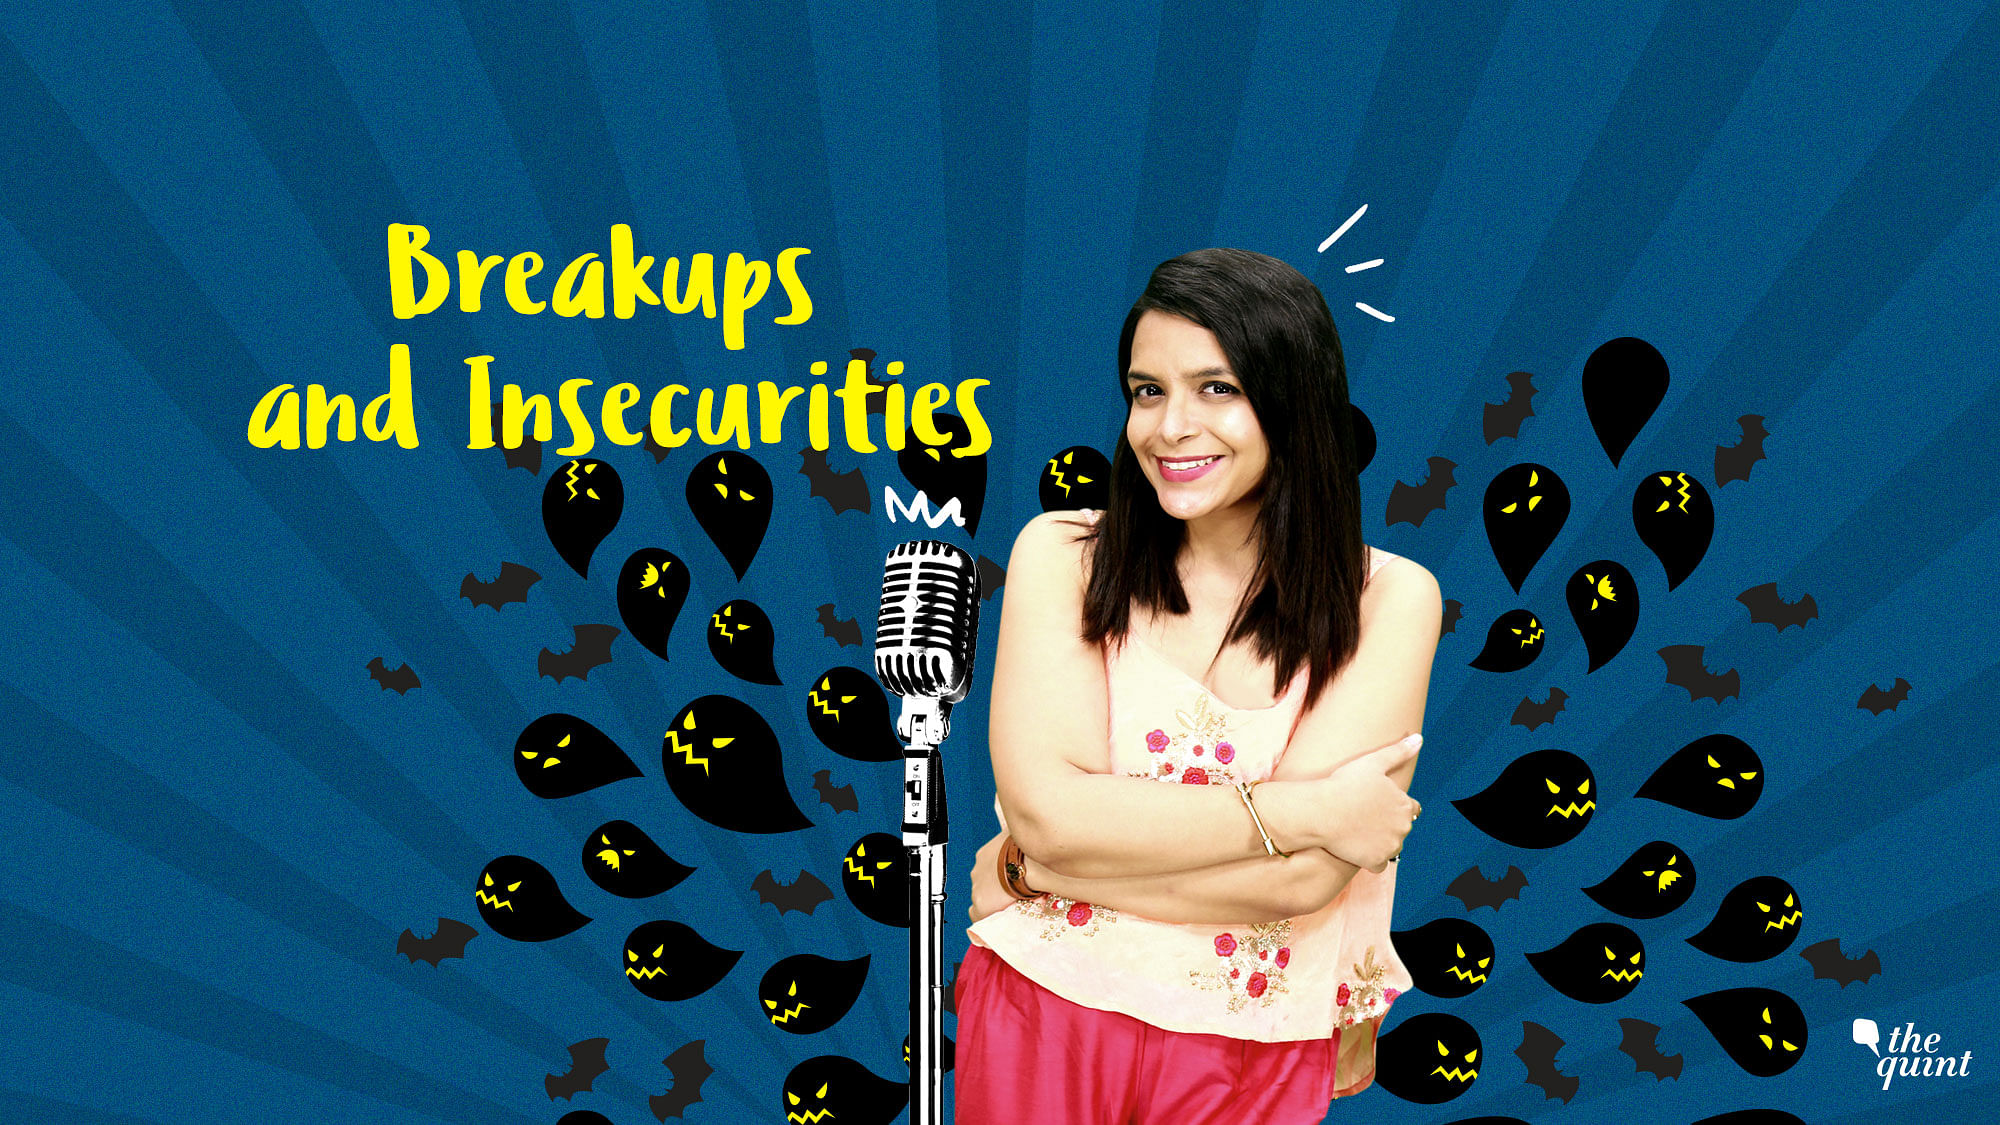 Breakups trigger our inner insecurities&nbsp;